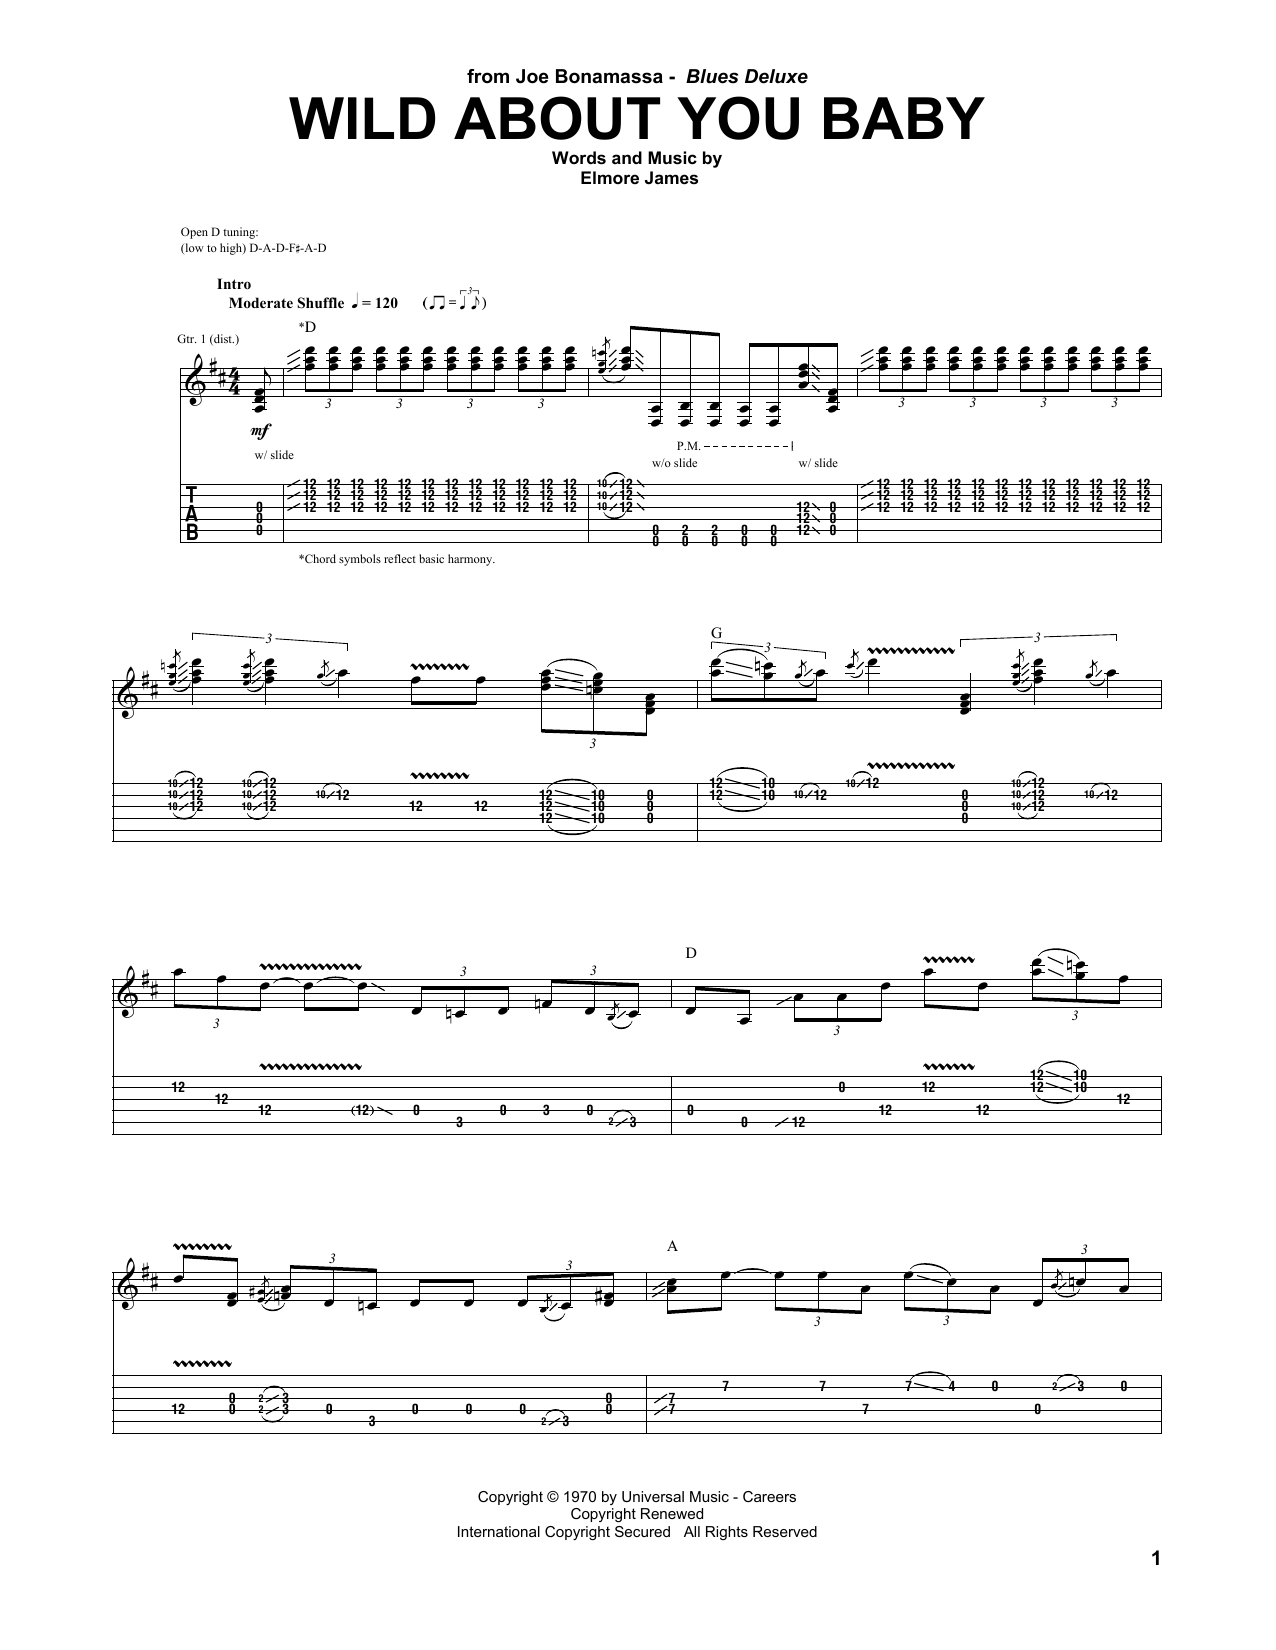 Joe Bonamassa Wild About You Baby Sheet Music Notes & Chords for Guitar Tab - Download or Print PDF